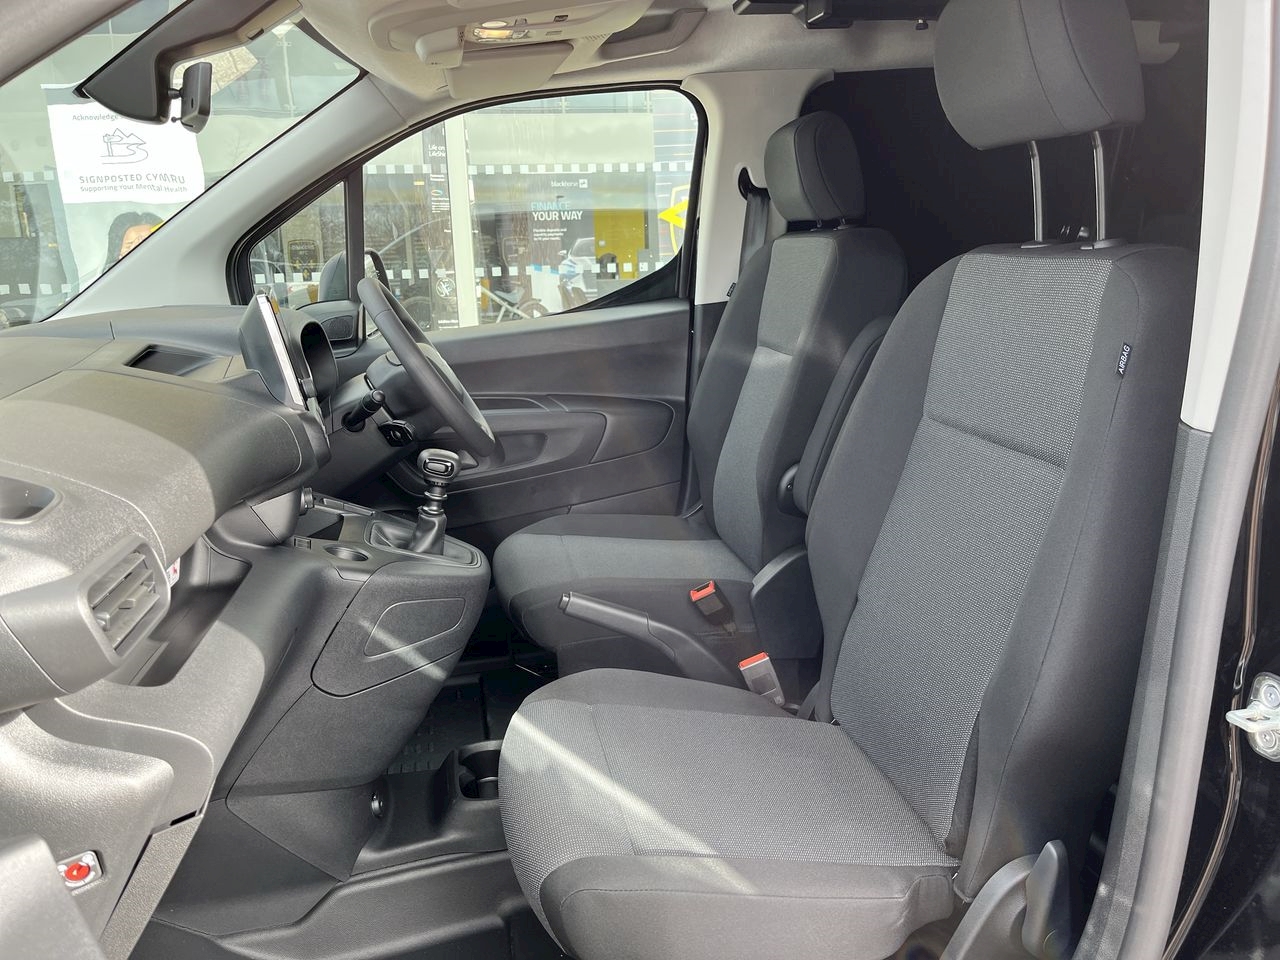 HDI 100ps Enterprise Edition XL 5 Seat Crew Van with Sat Nav Car Play & Air Con 1.5 5dr Combi Van Manual Diesel